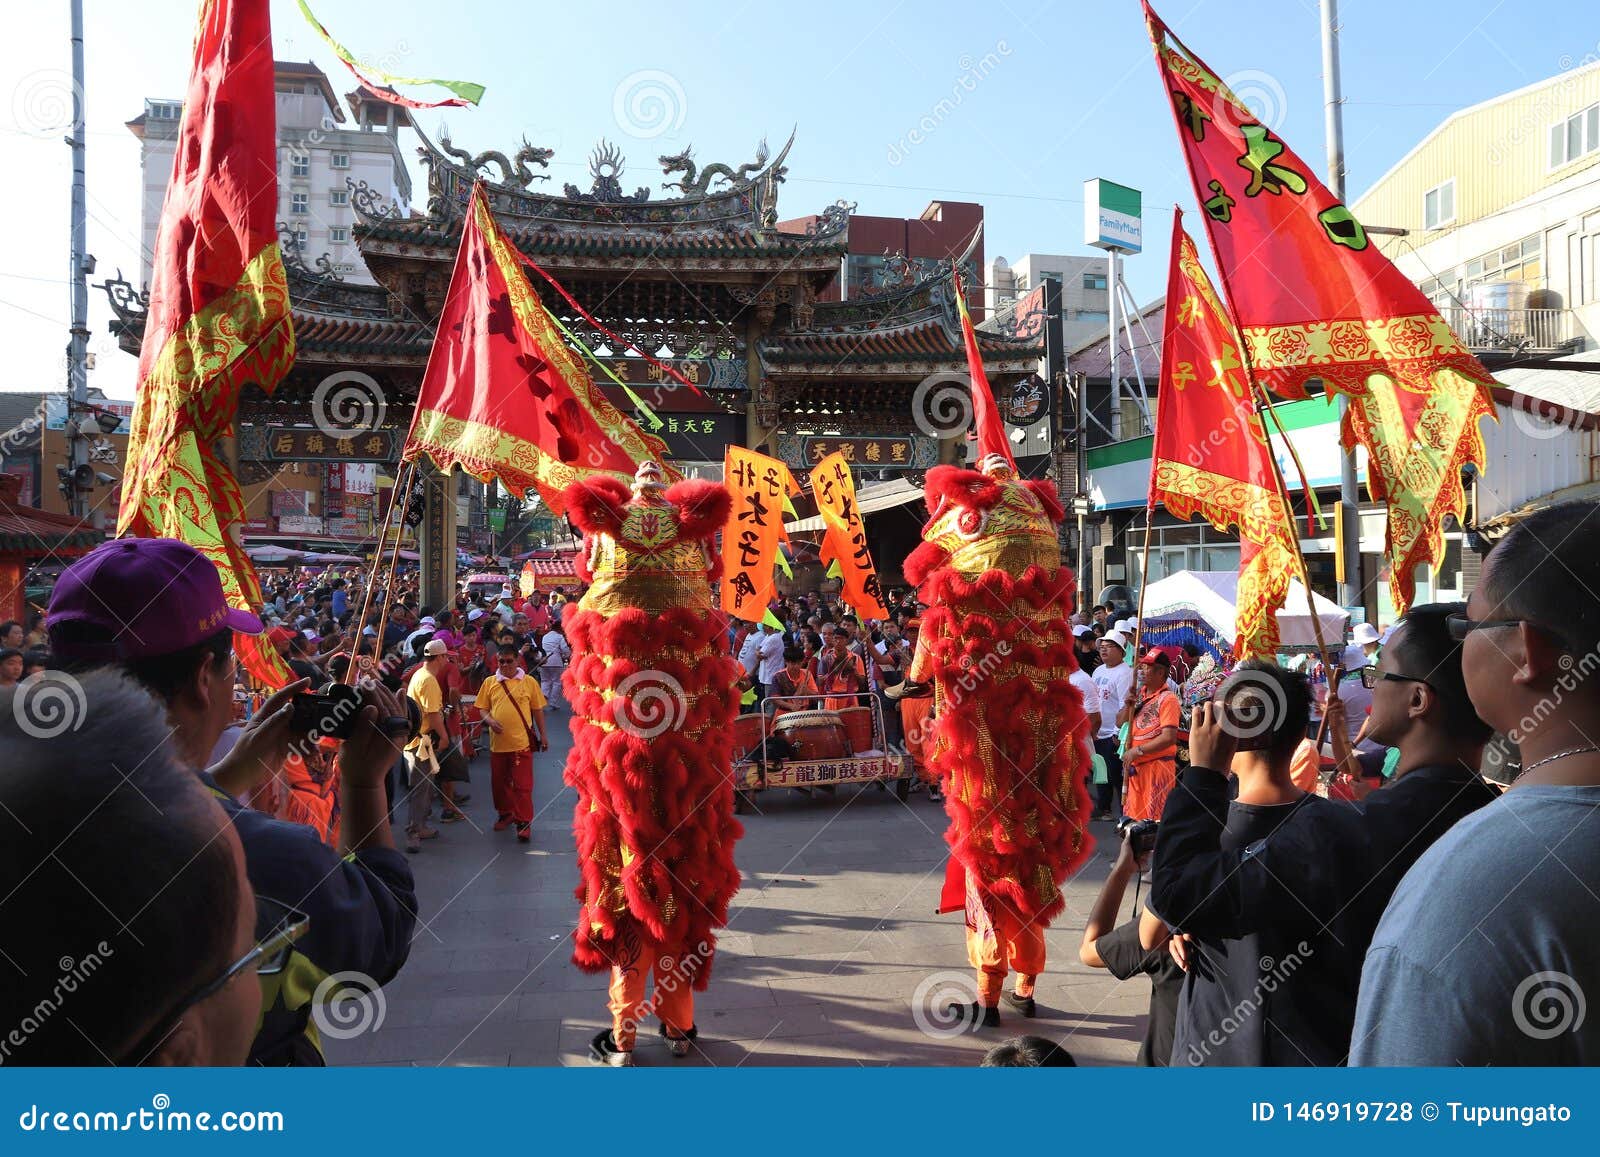 Festividades de Taiwán. LUKANG, TAIWAN - DECEMBER 2, 2018: Traditional dragon costume celebrations at Mazu Temple in Lukang, Taiwan. Lukang city boasts over 200 temples